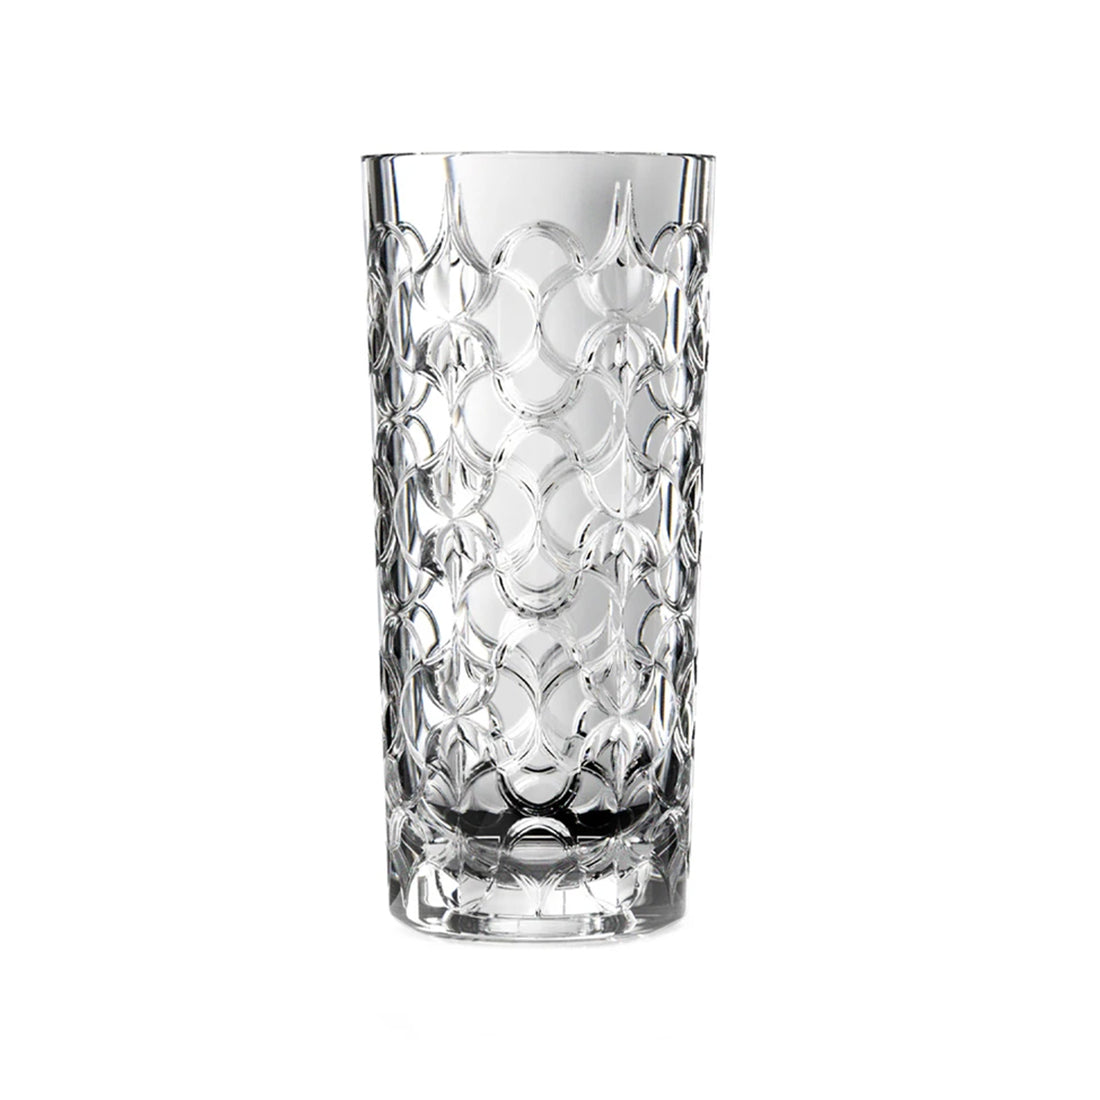 RCR (Made in Italy) Arabesque 28 CM Crystal Flower Vase